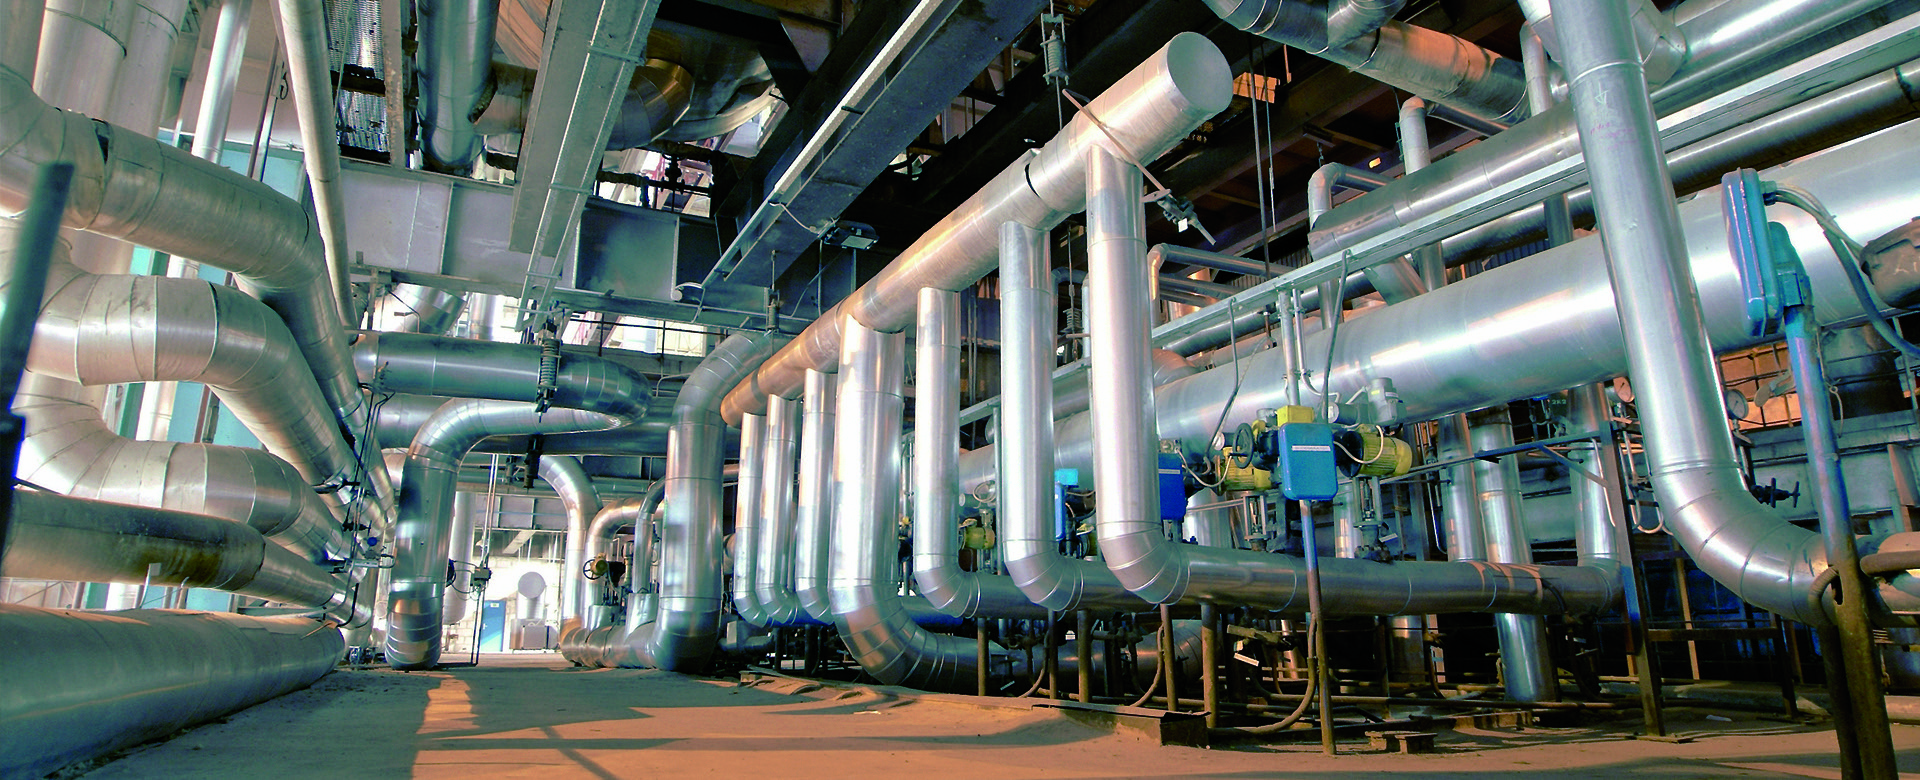 Boiler Conversion Services in Tempe, Phoenix, AZ - Integrity Plumbing